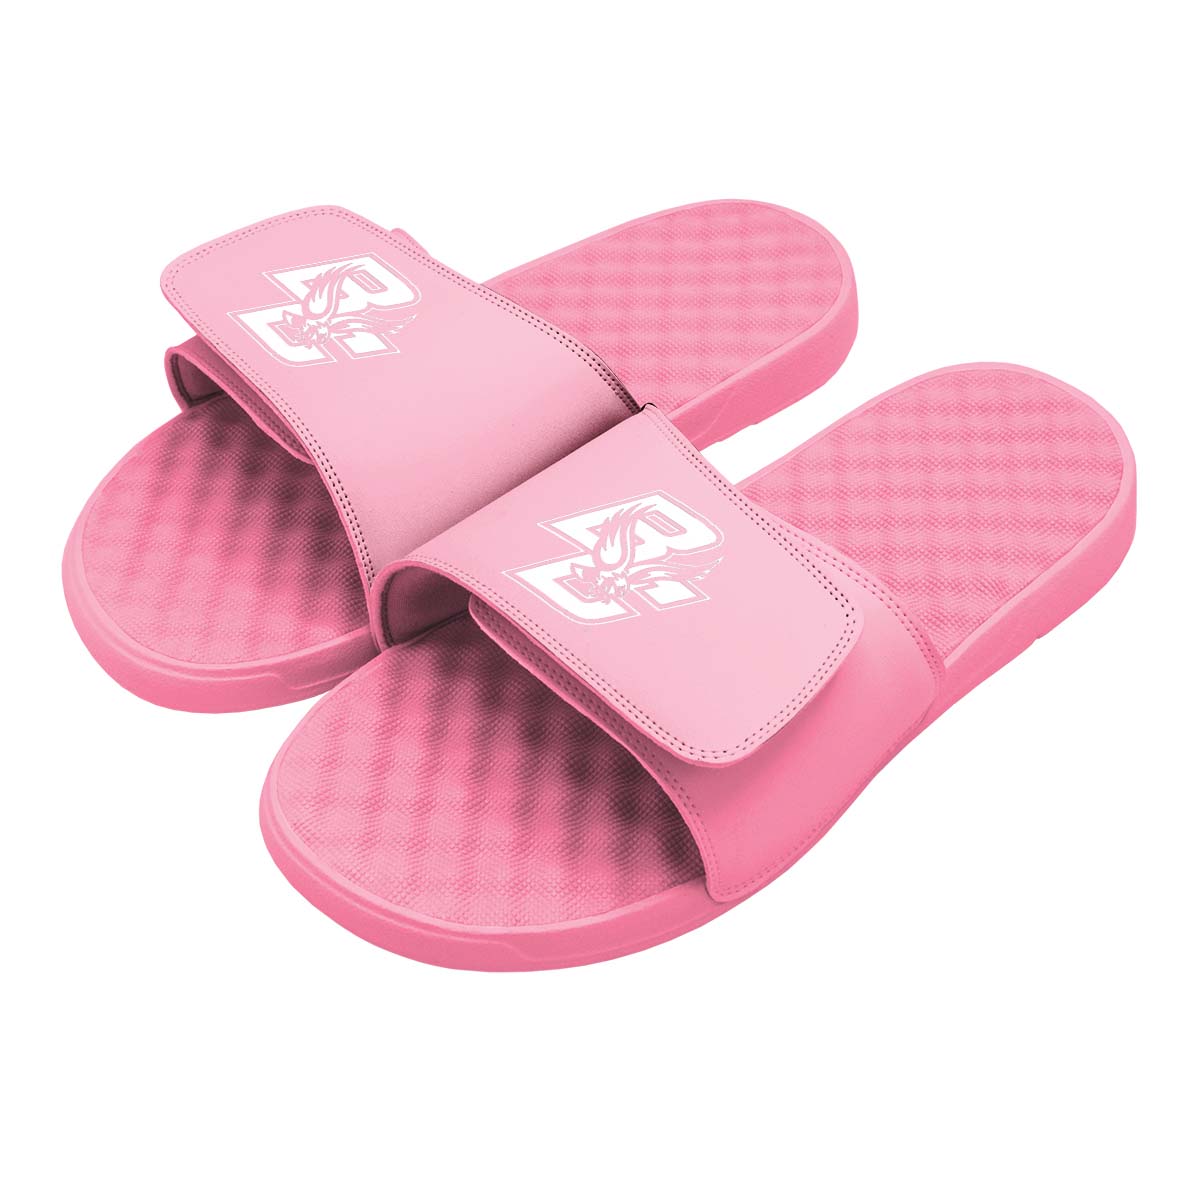 Boston College Primary Pink Slides